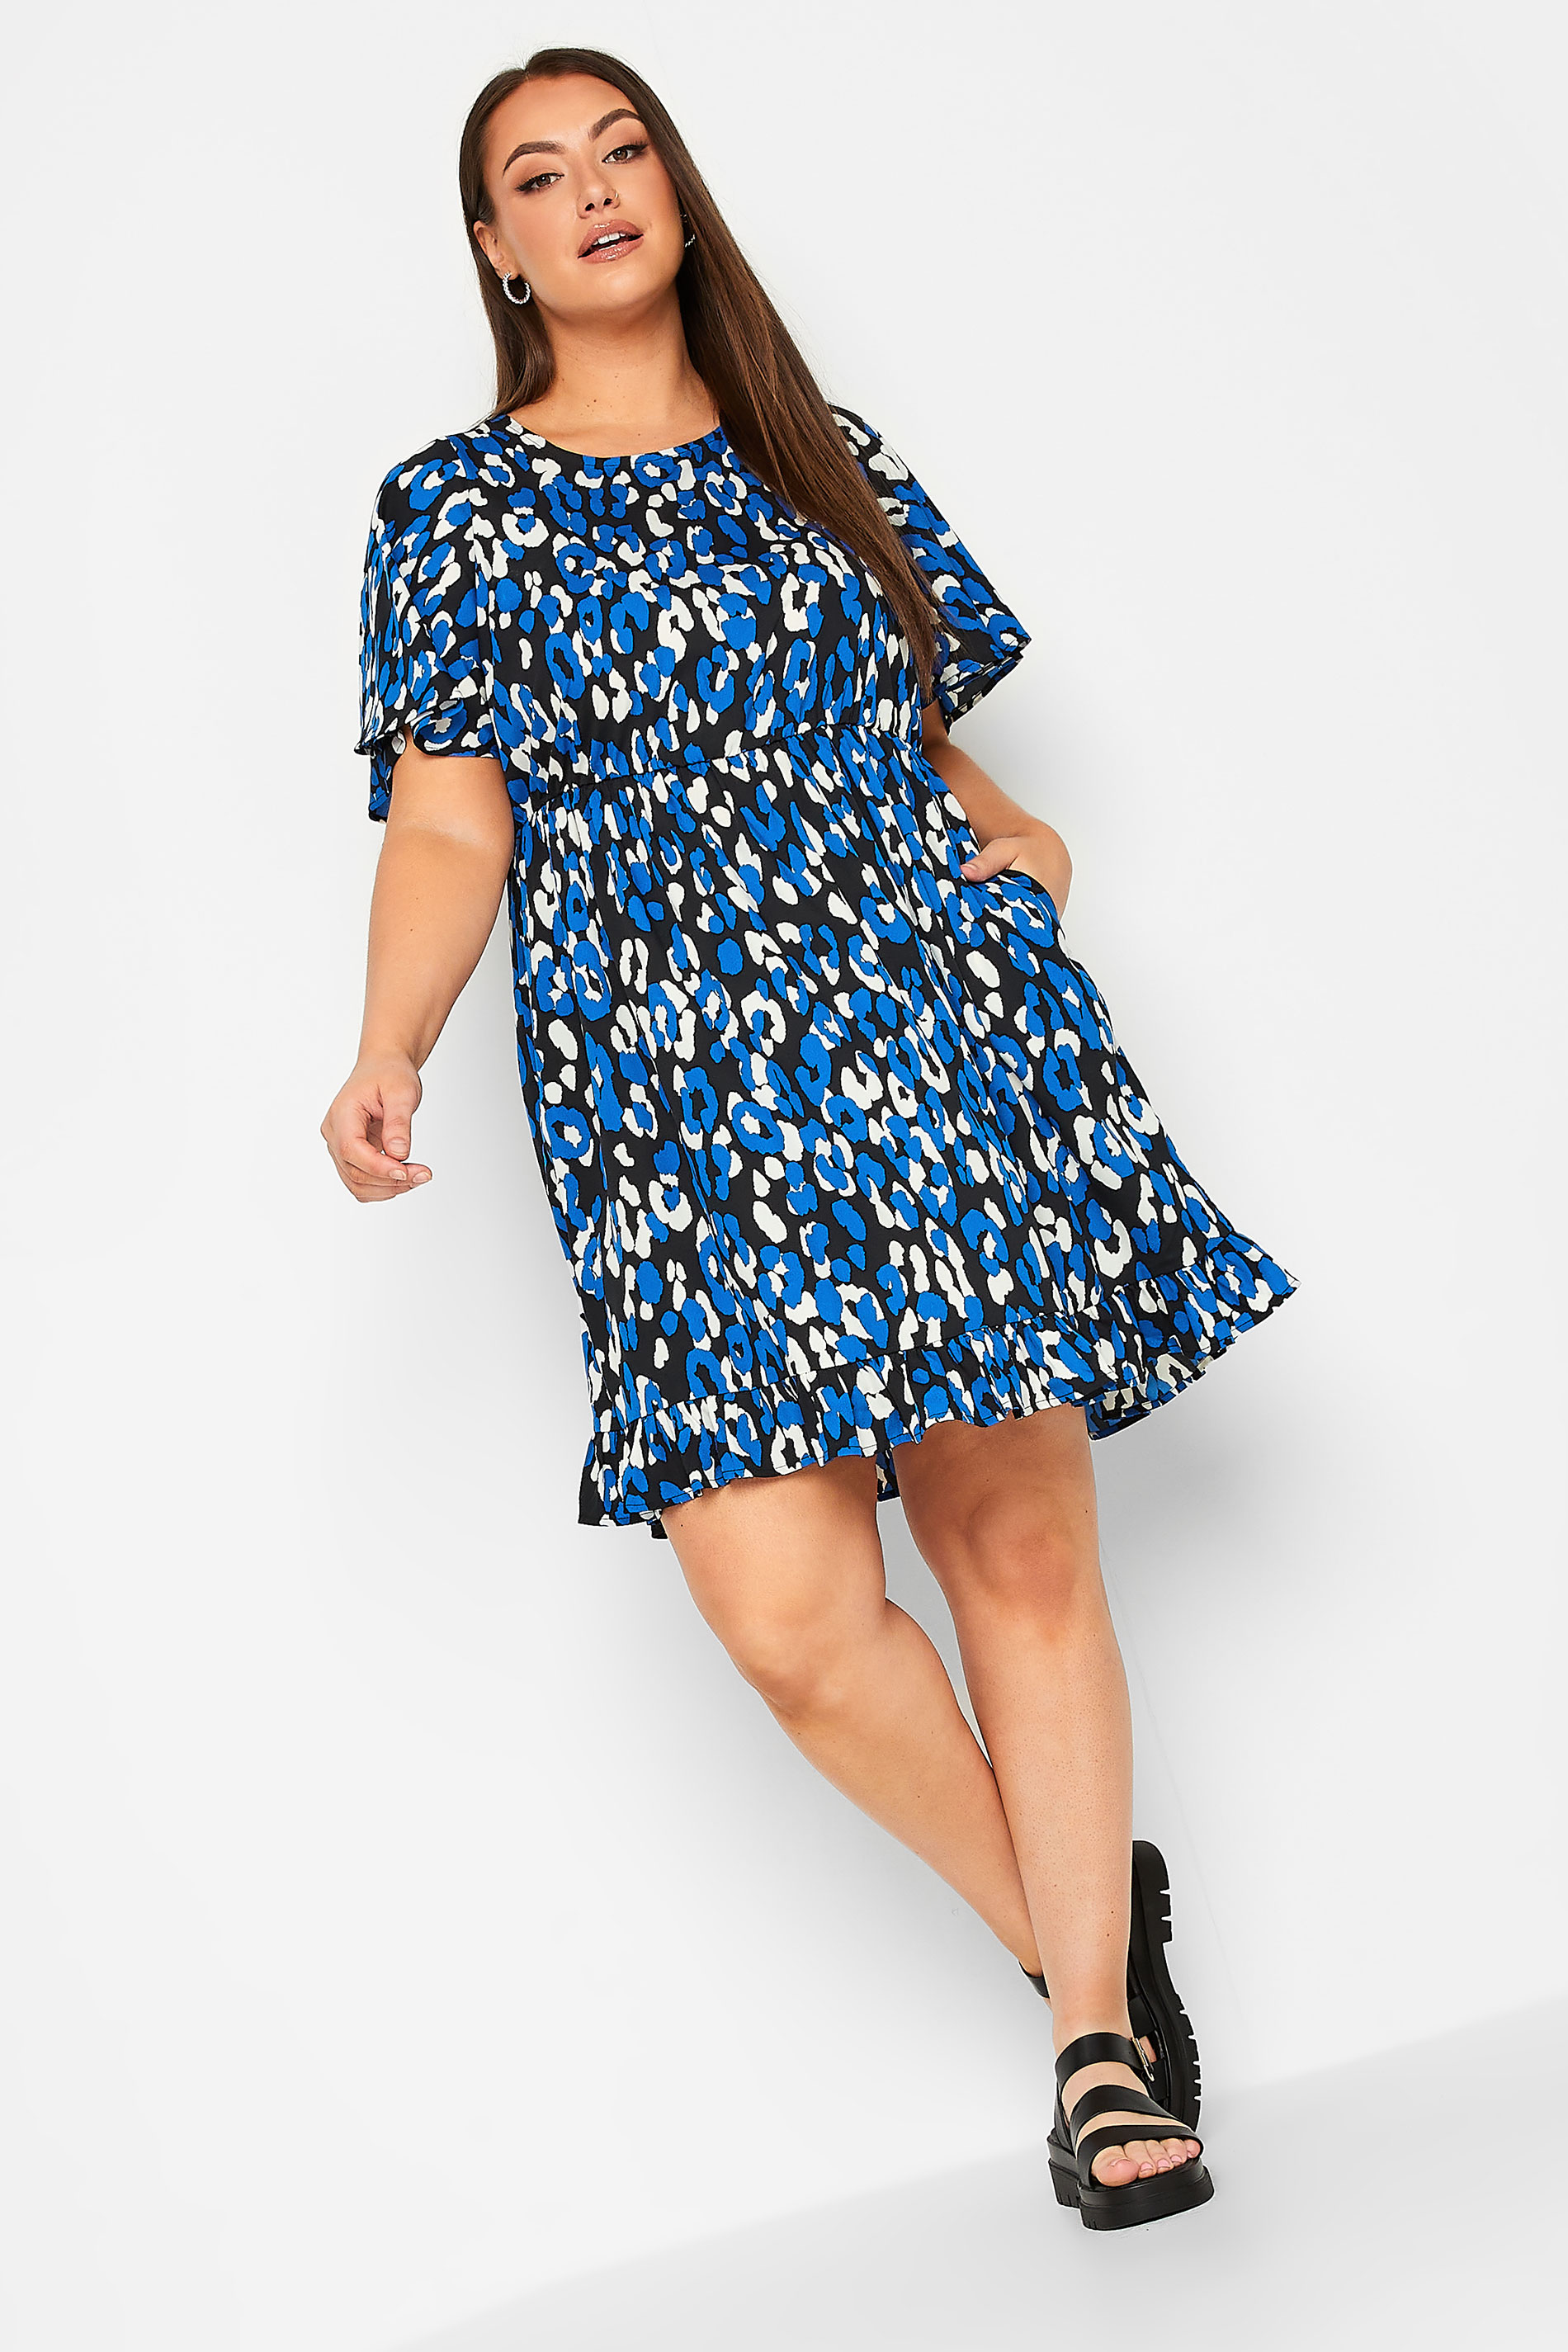 LIMITED COLLECTION Curve Plus Size Blue Leopard Print Mini Dress | Yours Clothing  2